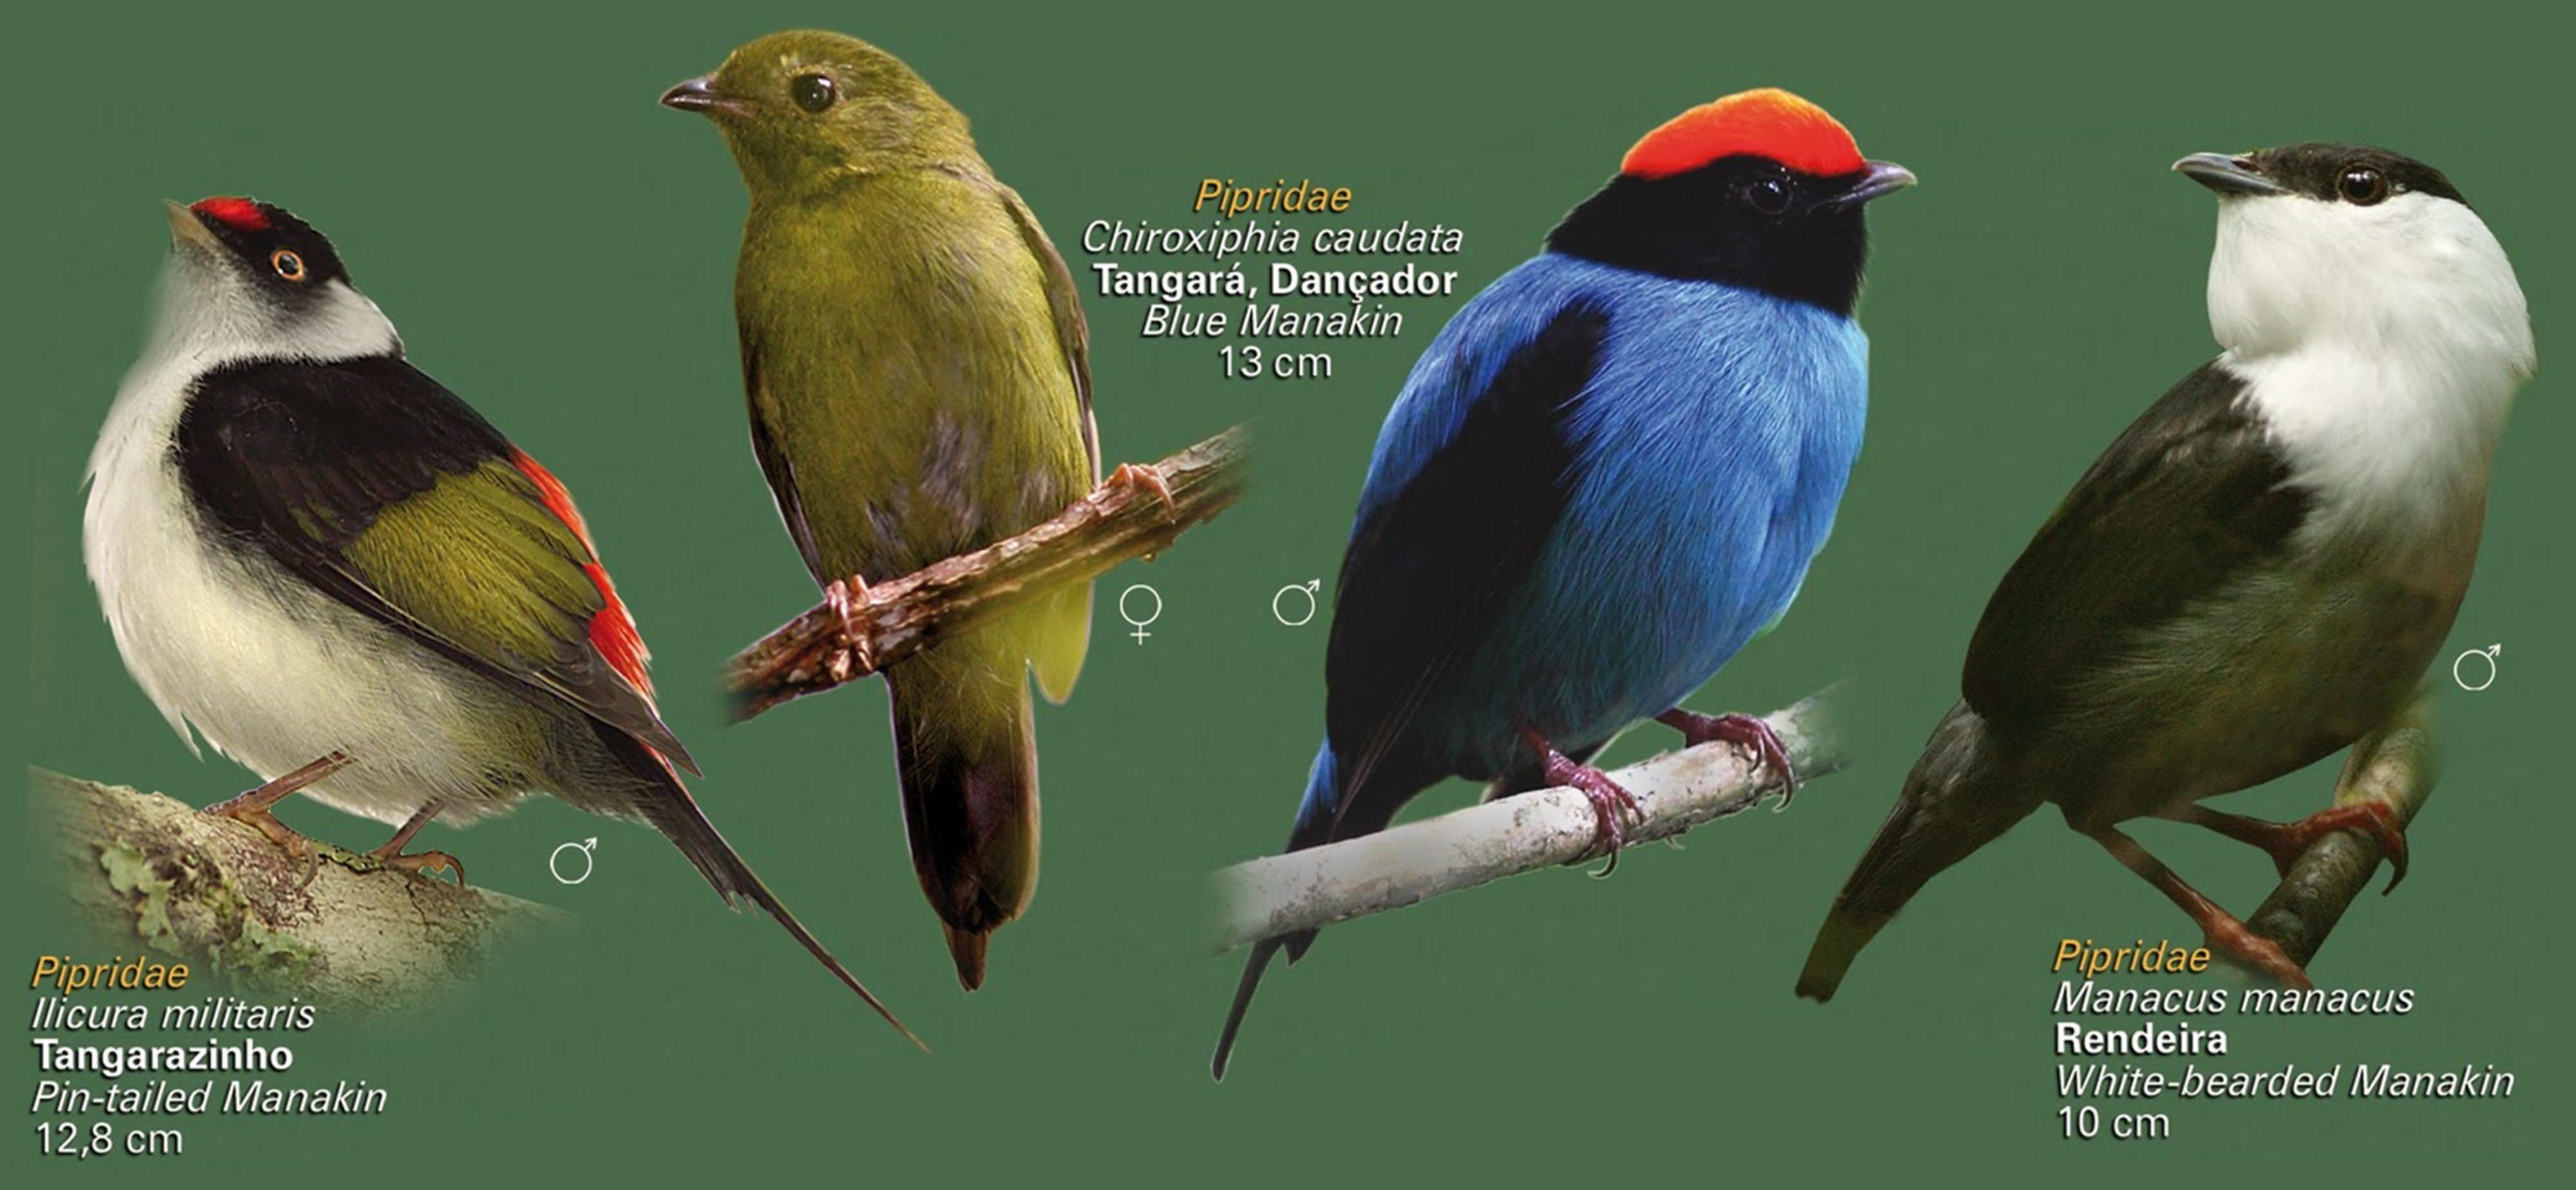 brazilian, Wild, Birds, Brazil Wallpaper